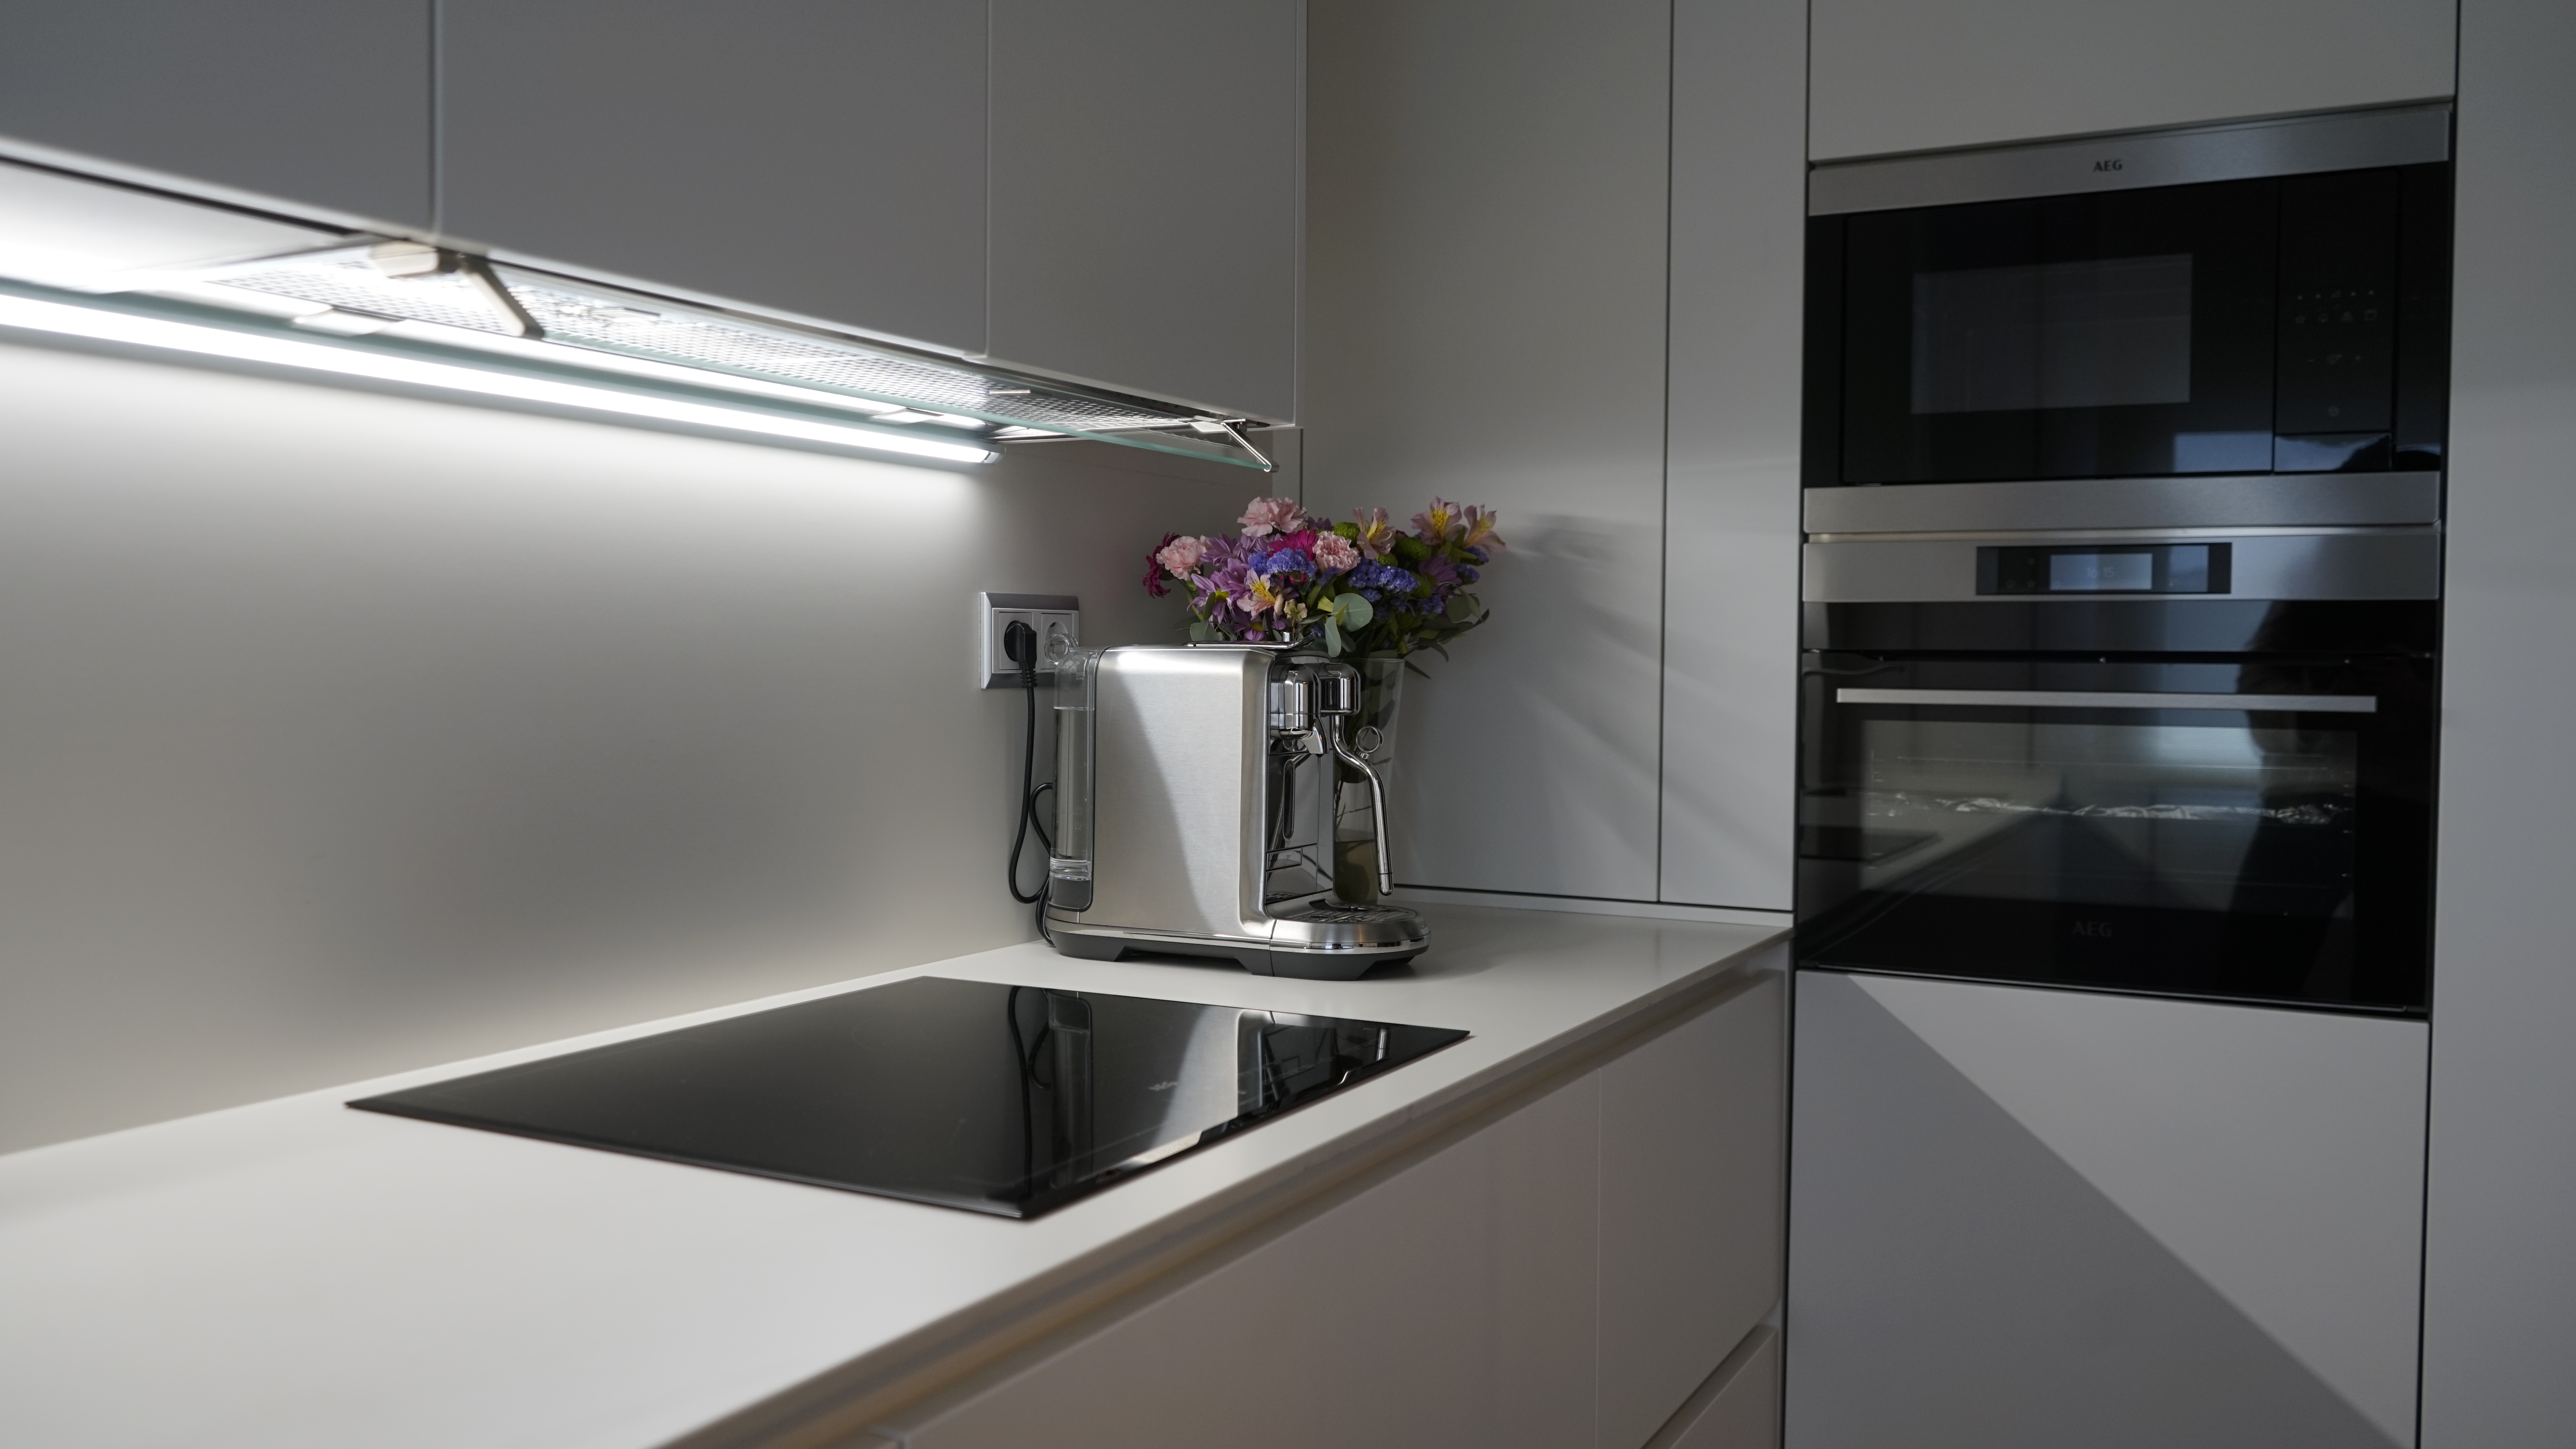 Aprende a elegir las mejores luces led para tu cocina » ExtraConfidencial